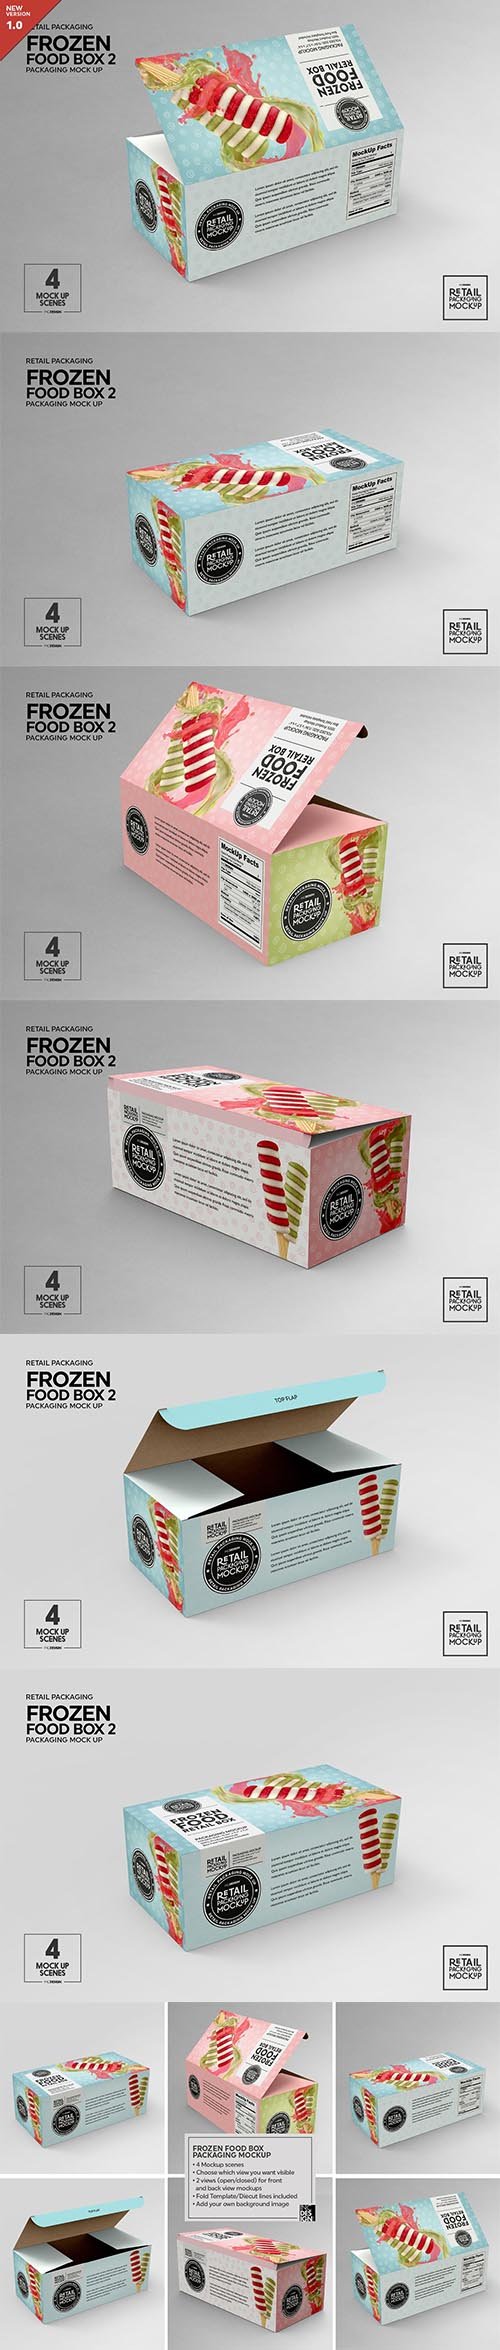 CreativeMarket - Retail Frozen Food Packaging2 Mockup - 5730740